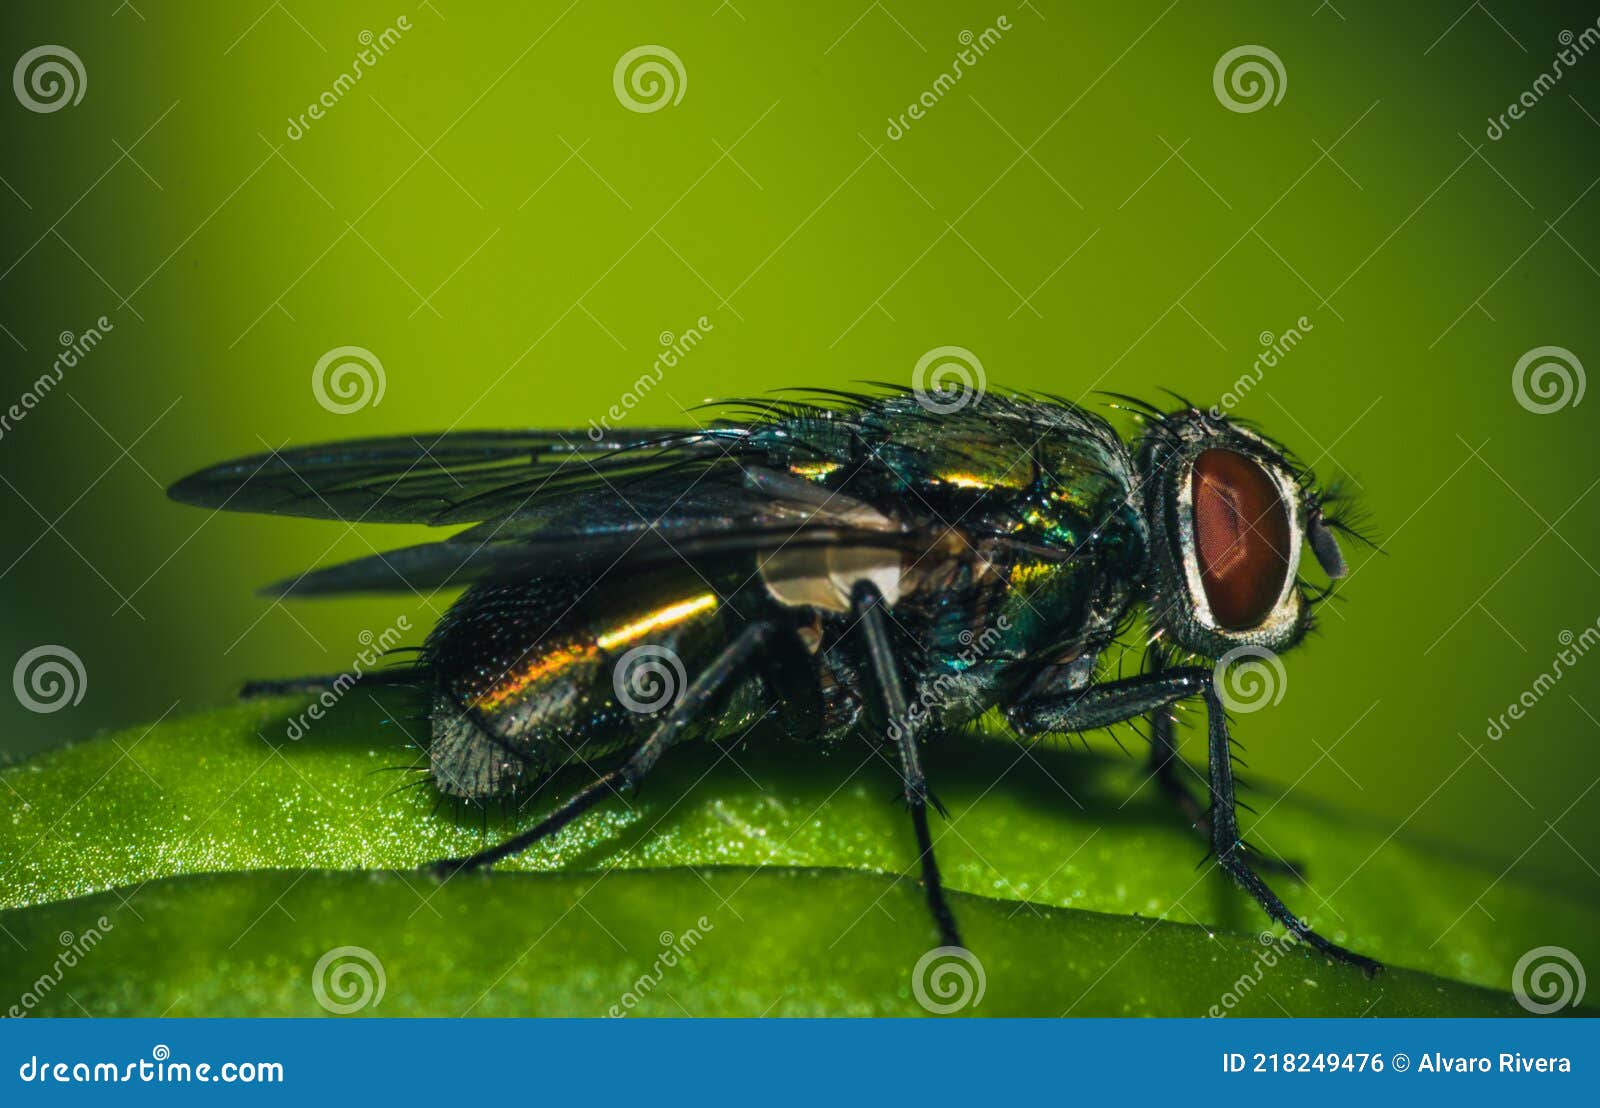 fly leaf bee nature green midge macro closeup